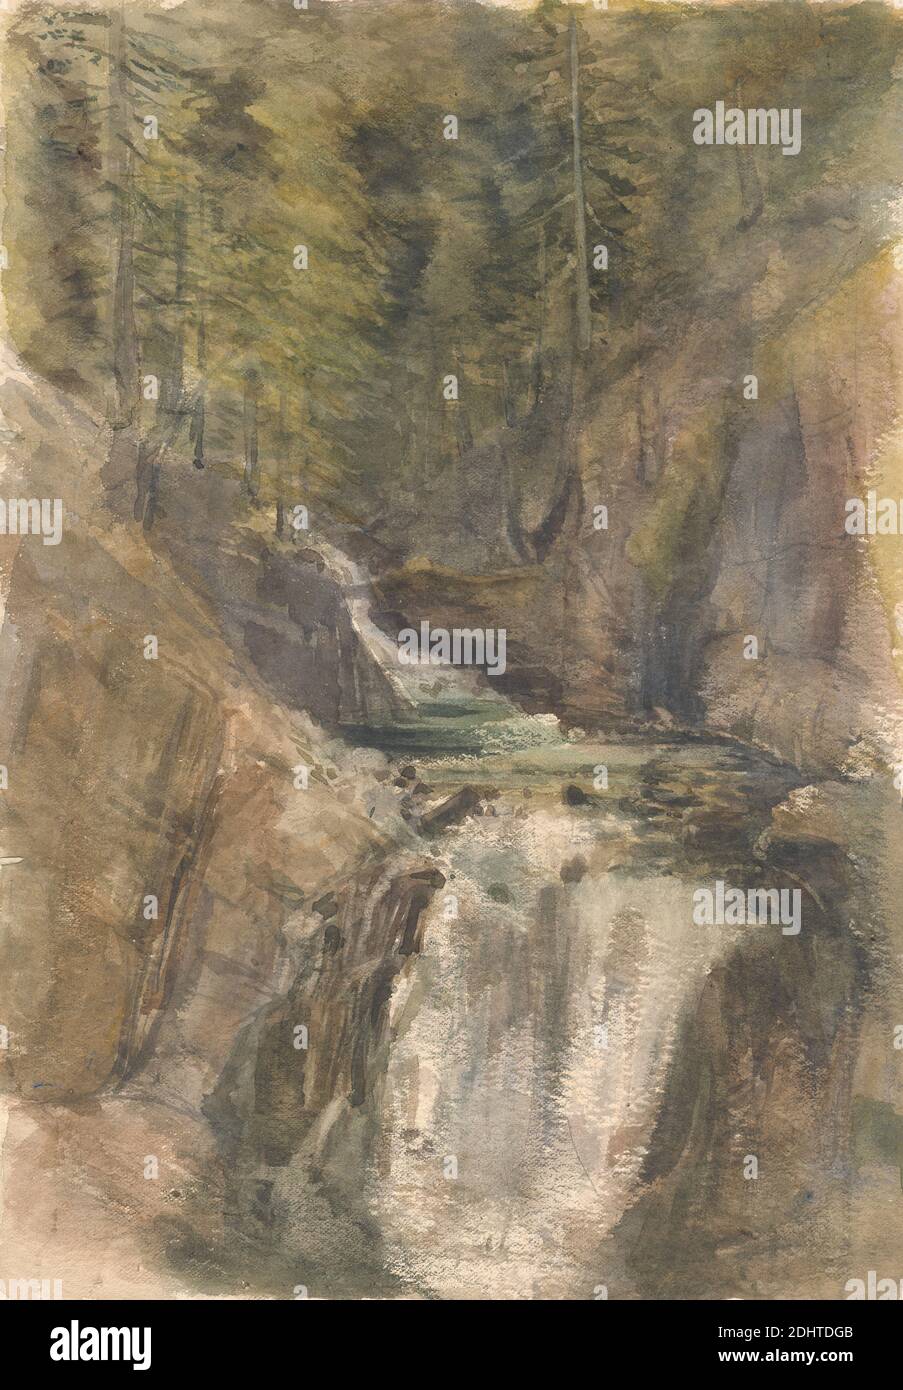 Waterfall and Forest, artista desconocido, siglo XIX, sin fecha, acuarela y grafito sobre papel grueso, moderadamente texturizado, crema de move, Hoja: 10 × 7 pulgadas (25.4 × 17.8 cm), bosque, paisaje, cascada Foto de stock